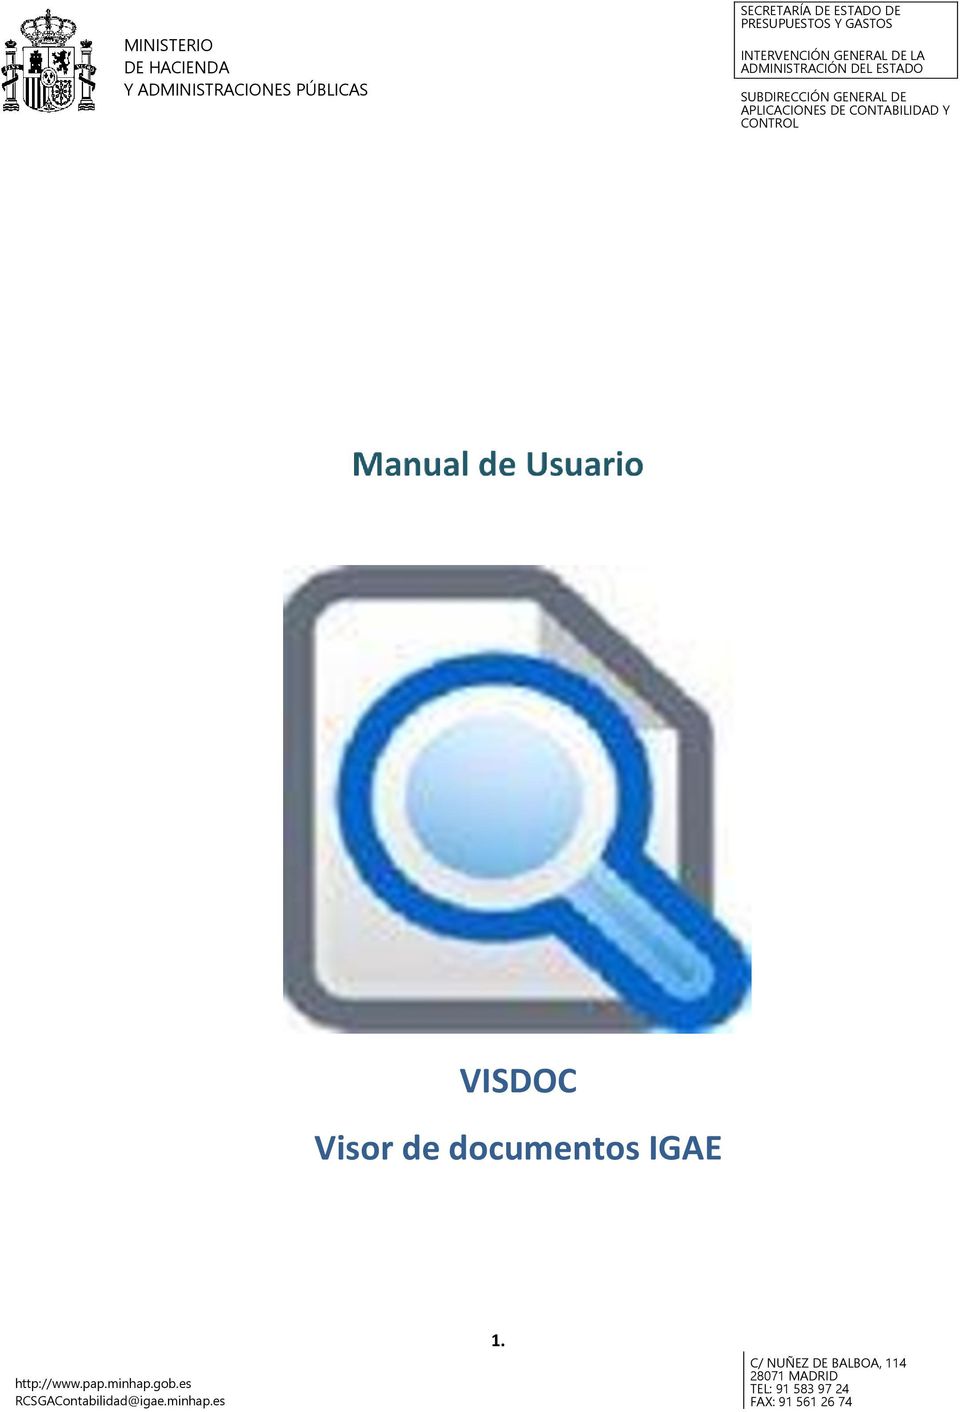 APLICACIONES DE CONTABILIDAD Y CONTROL VISDOC Visor de documentos IGAE http://www.pap.minhap.